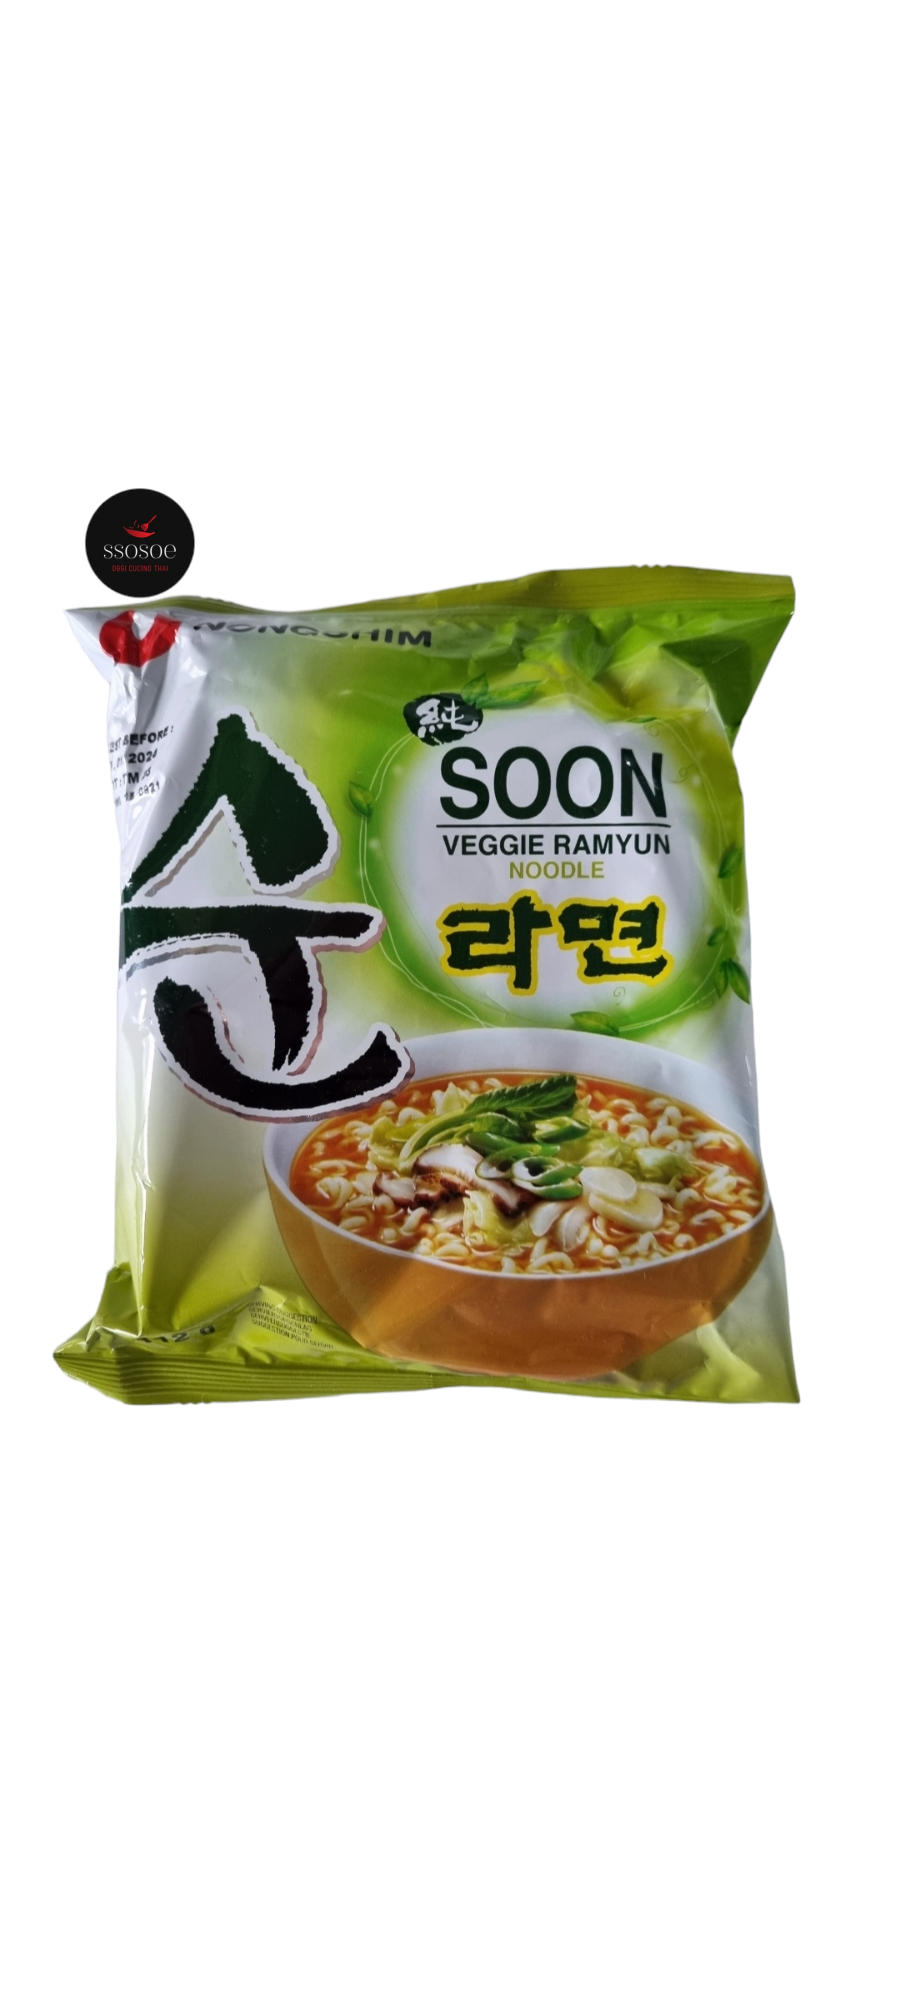 TMC 11/01/24-Noodles istantanei in zuppa di verdure (non piccante) - N –  SSOSOE